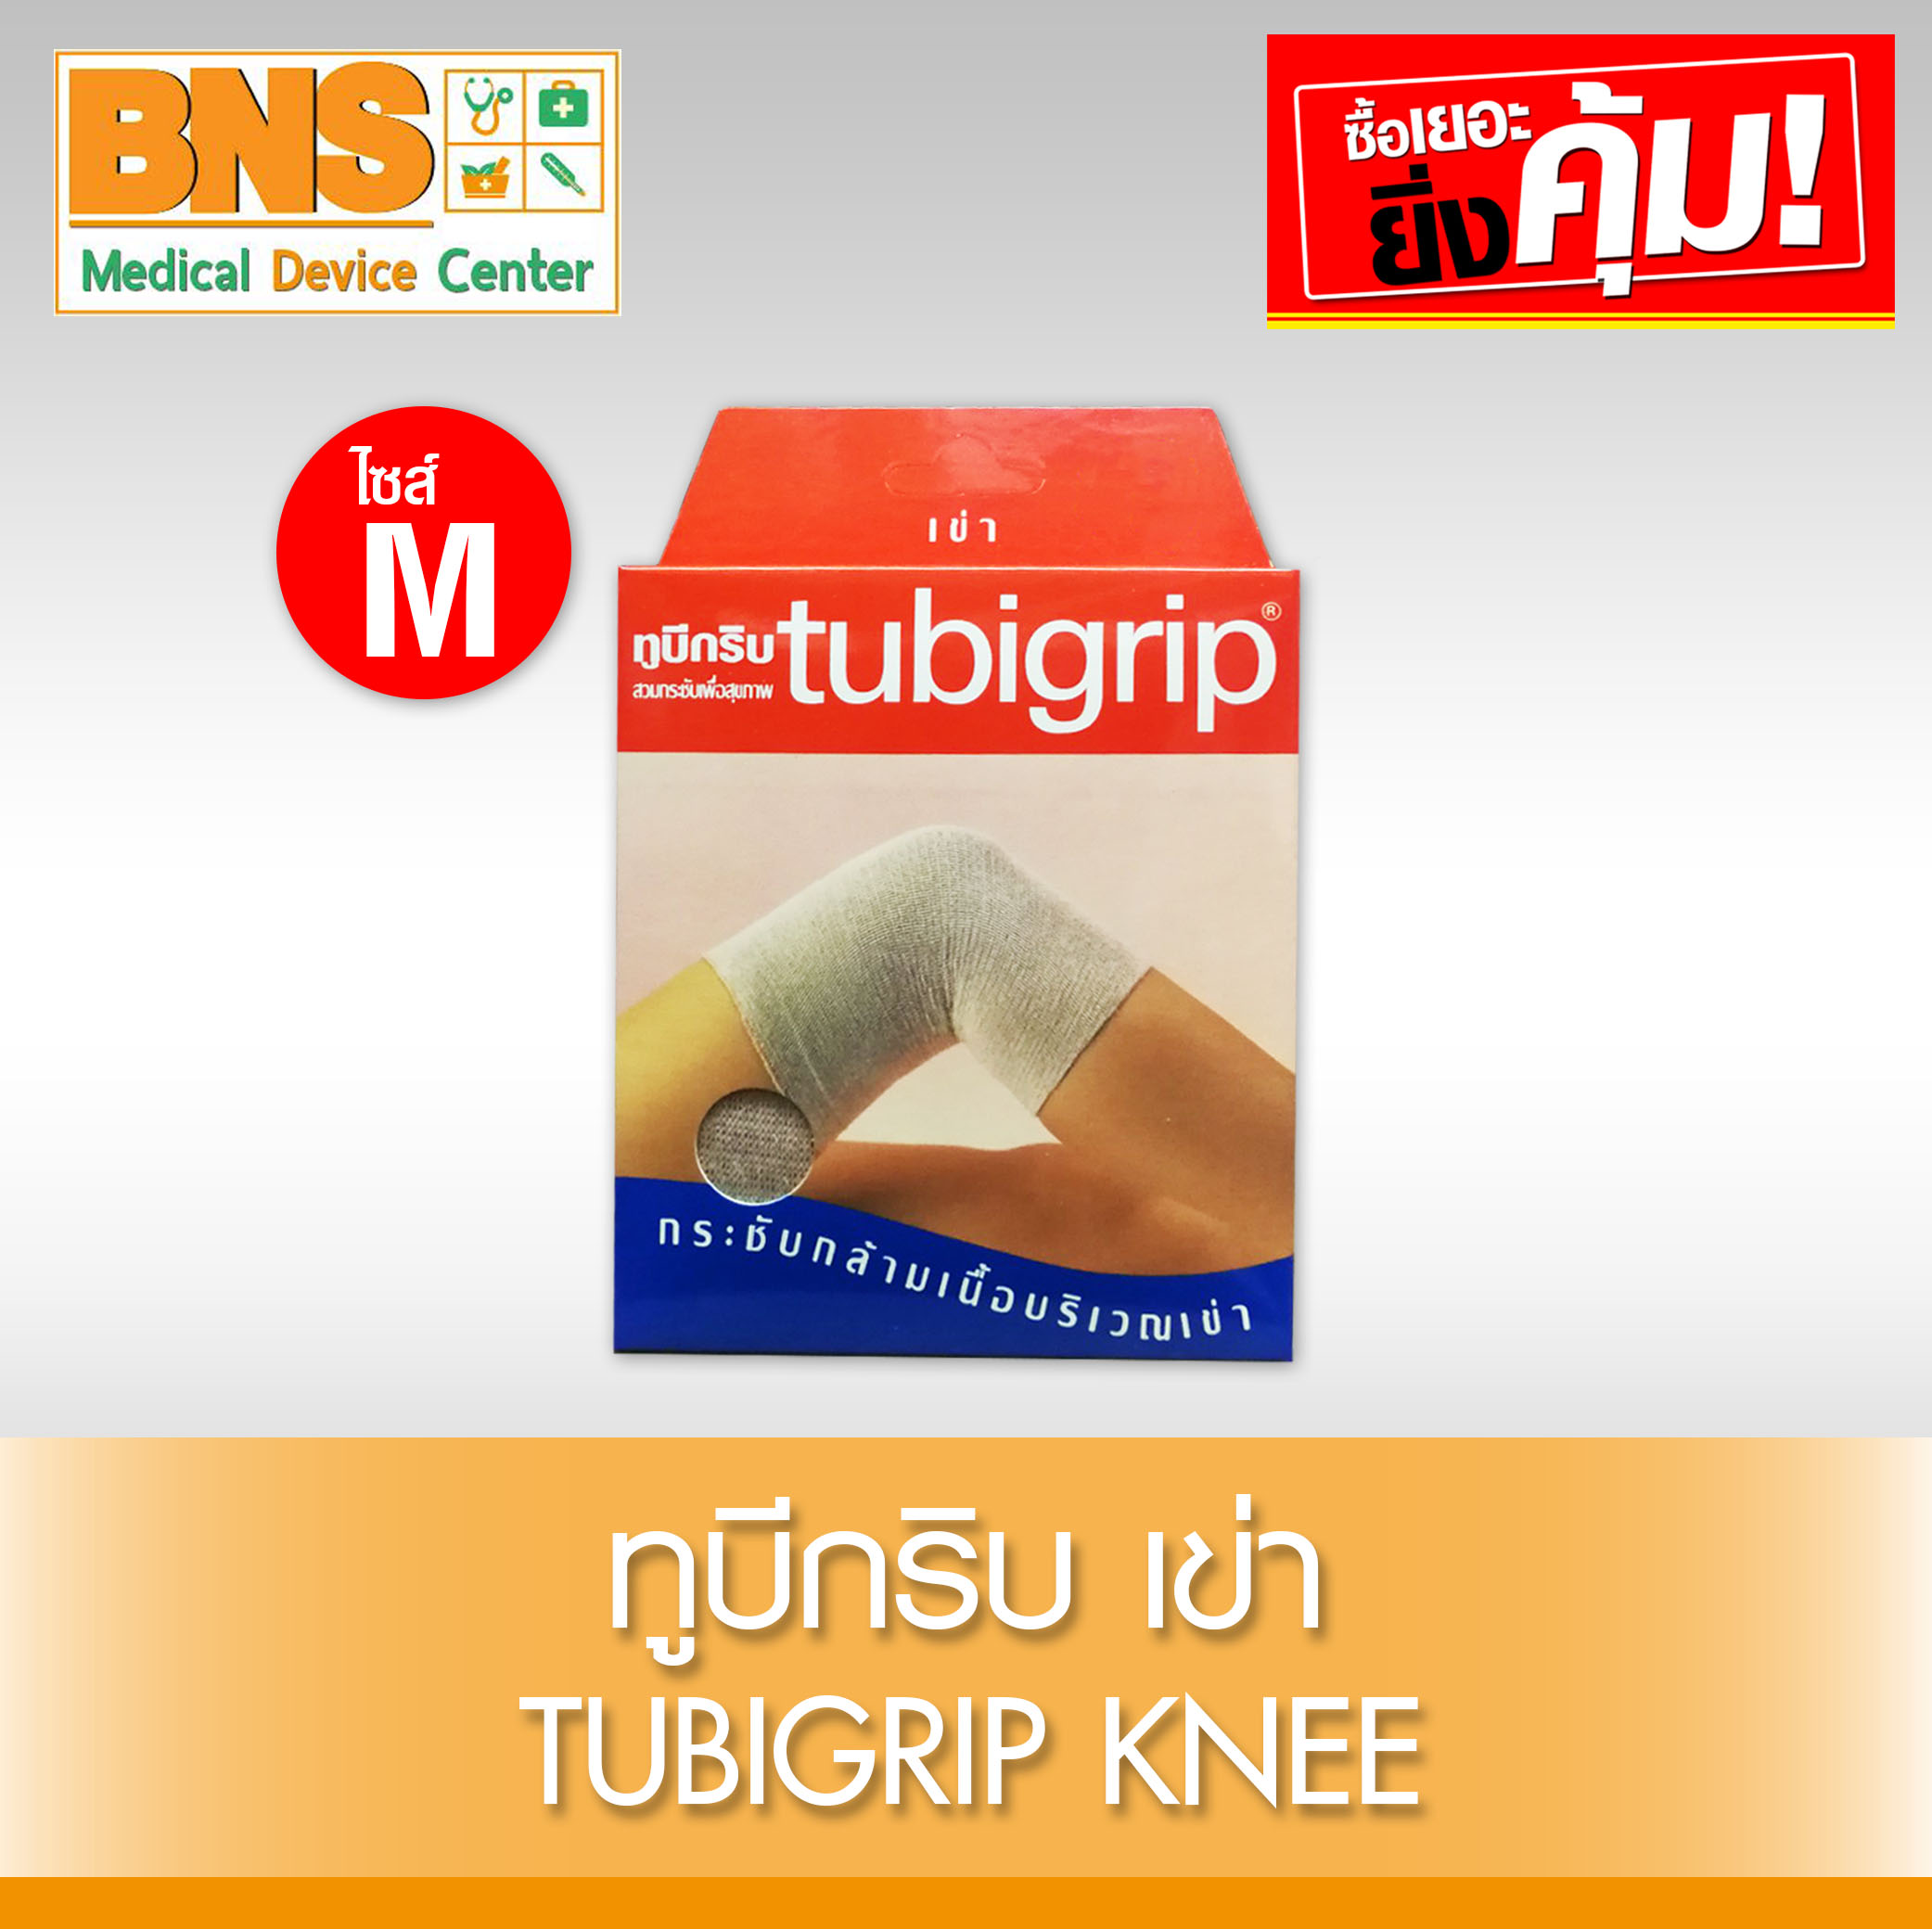 Tubigrip Knee ทูบีกริบ (เข่า) ไซร้ M (สินค้าใหม่) (ถูกที่สุด) By BNS